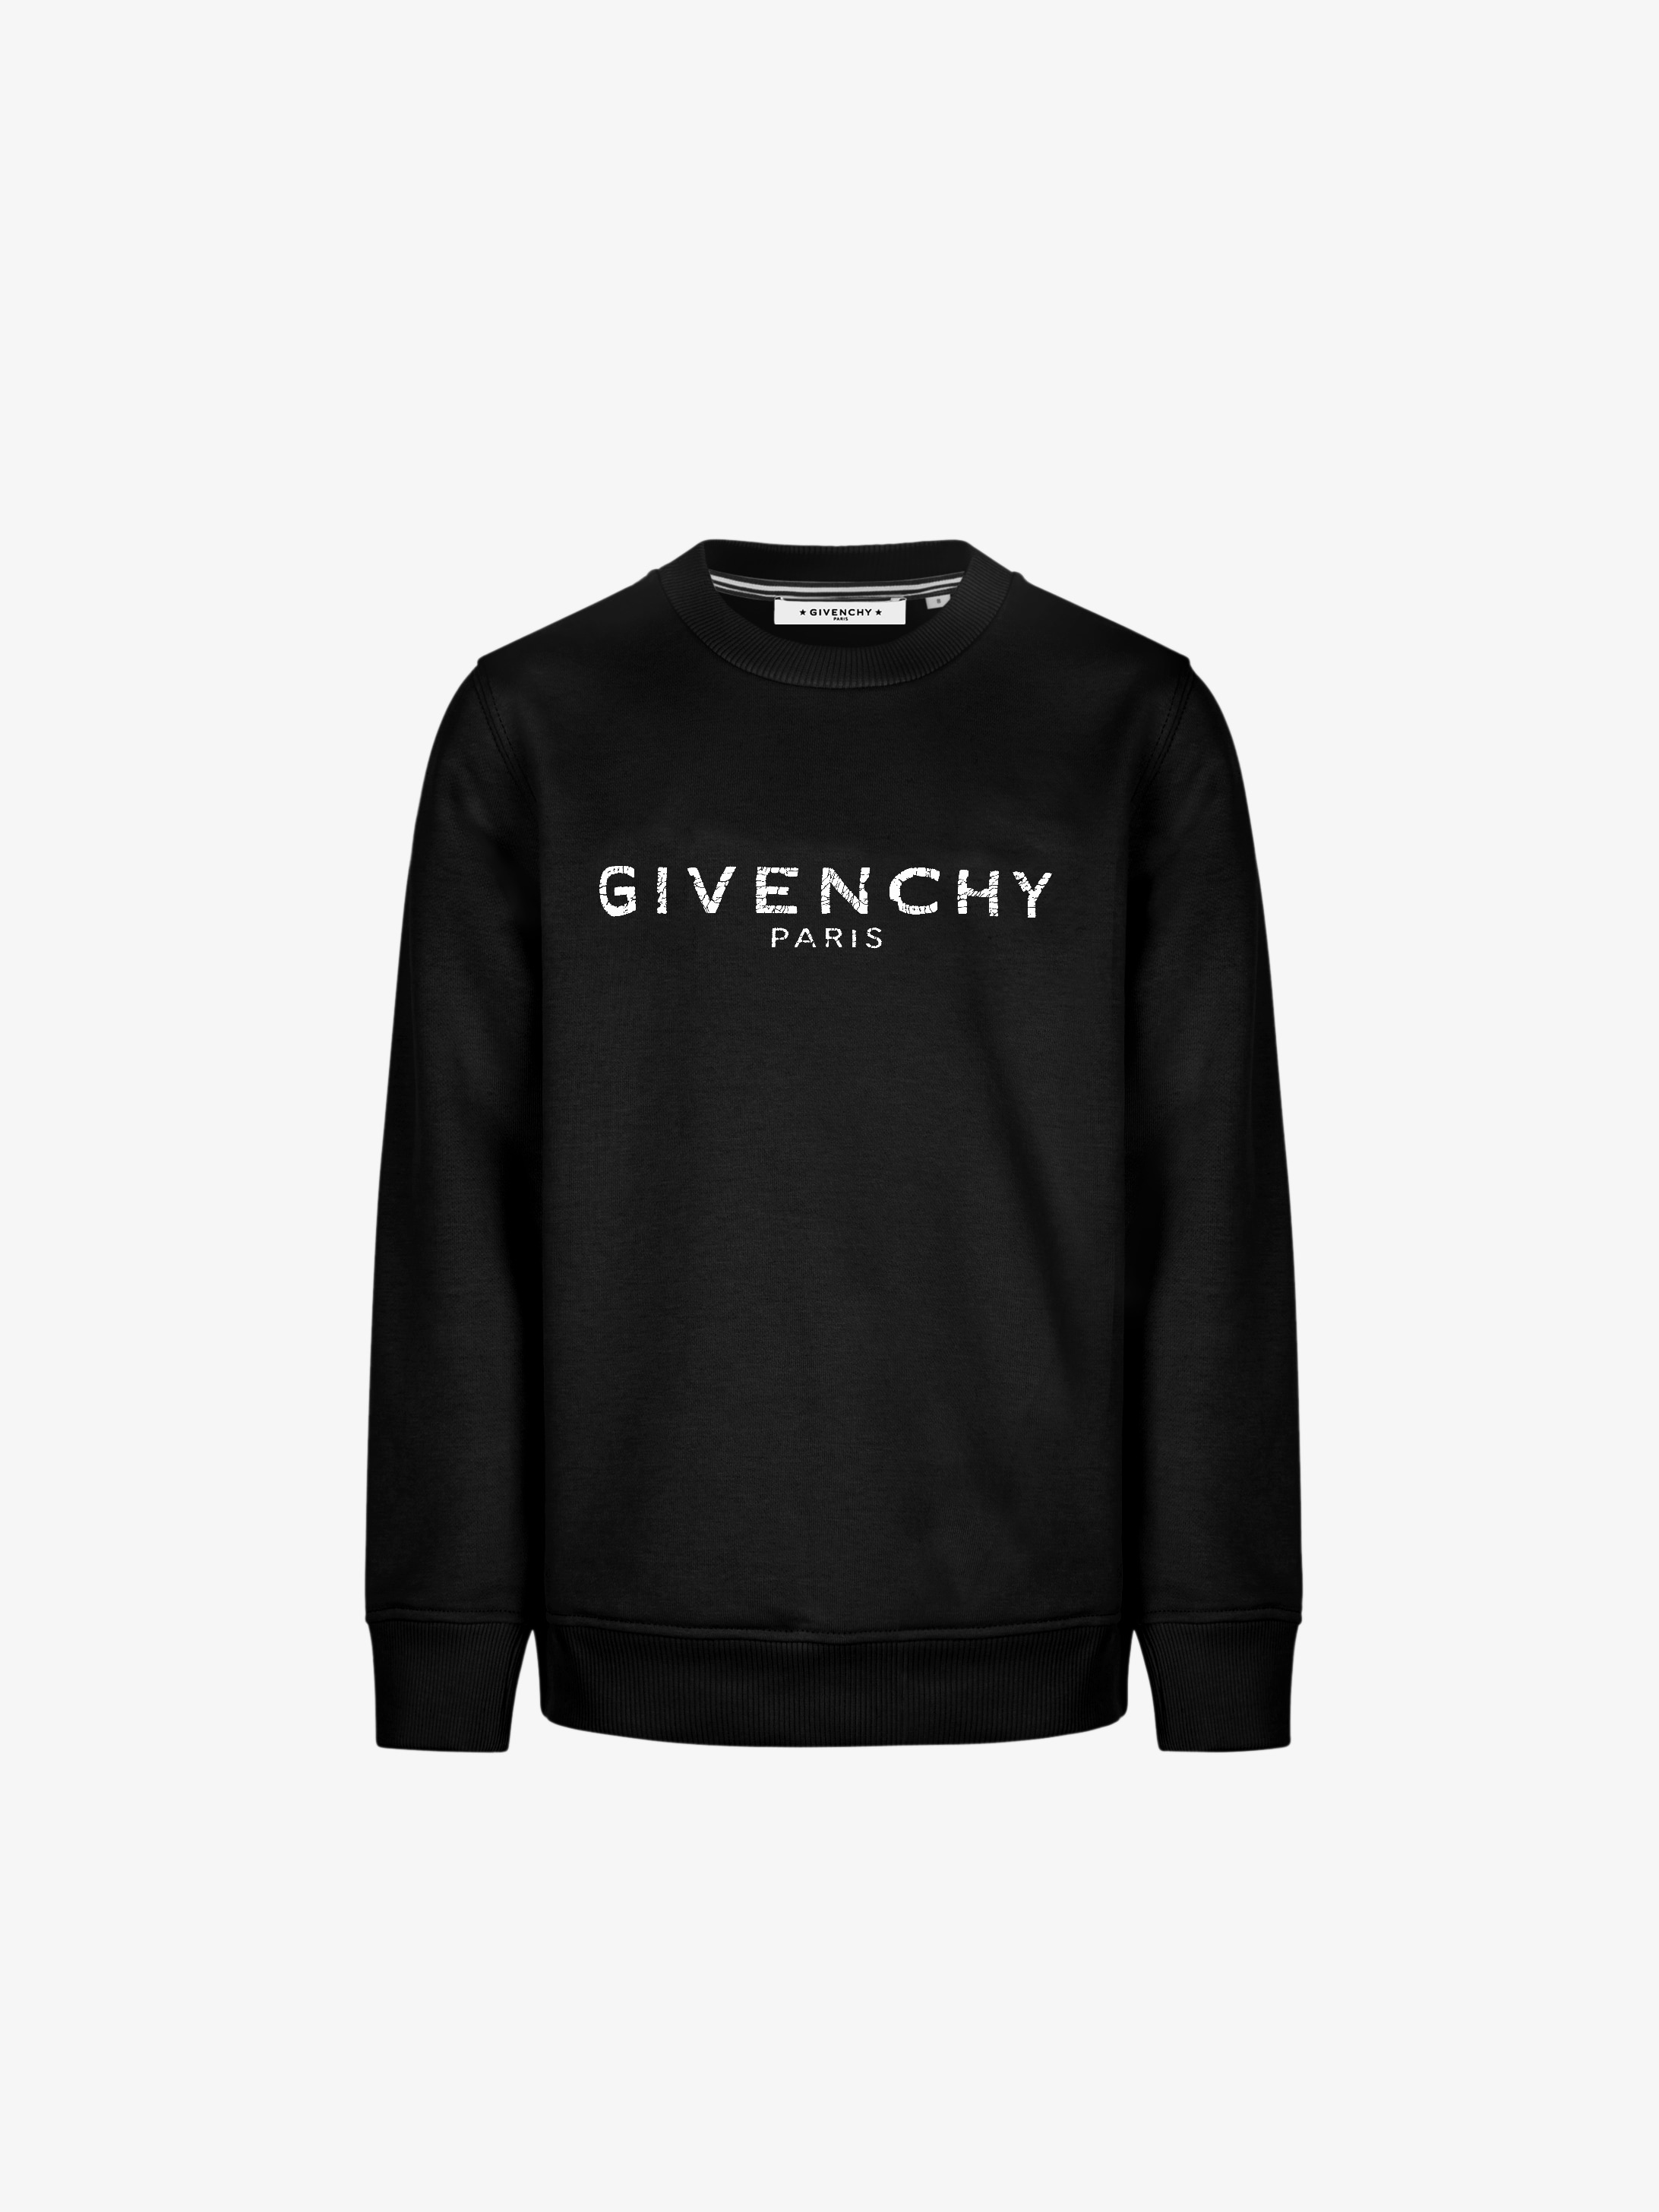 GIVENCHY PARIS sweatshirt | GIVENCHY Paris